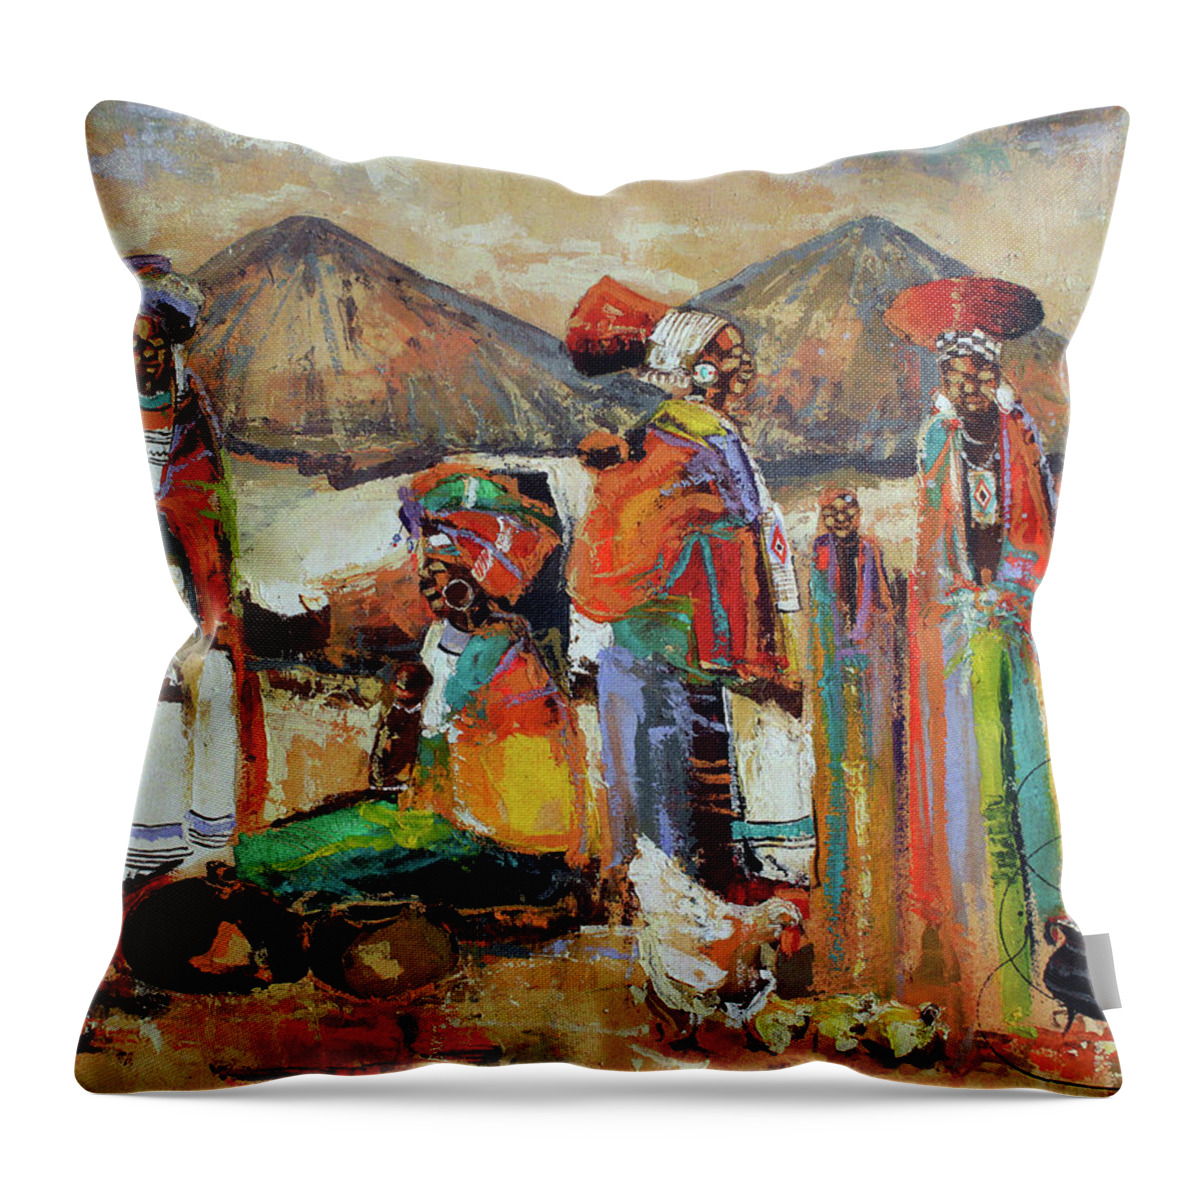 Nni Throw Pillow featuring the painting Preparing The Feast by Ndabuko Ntuli